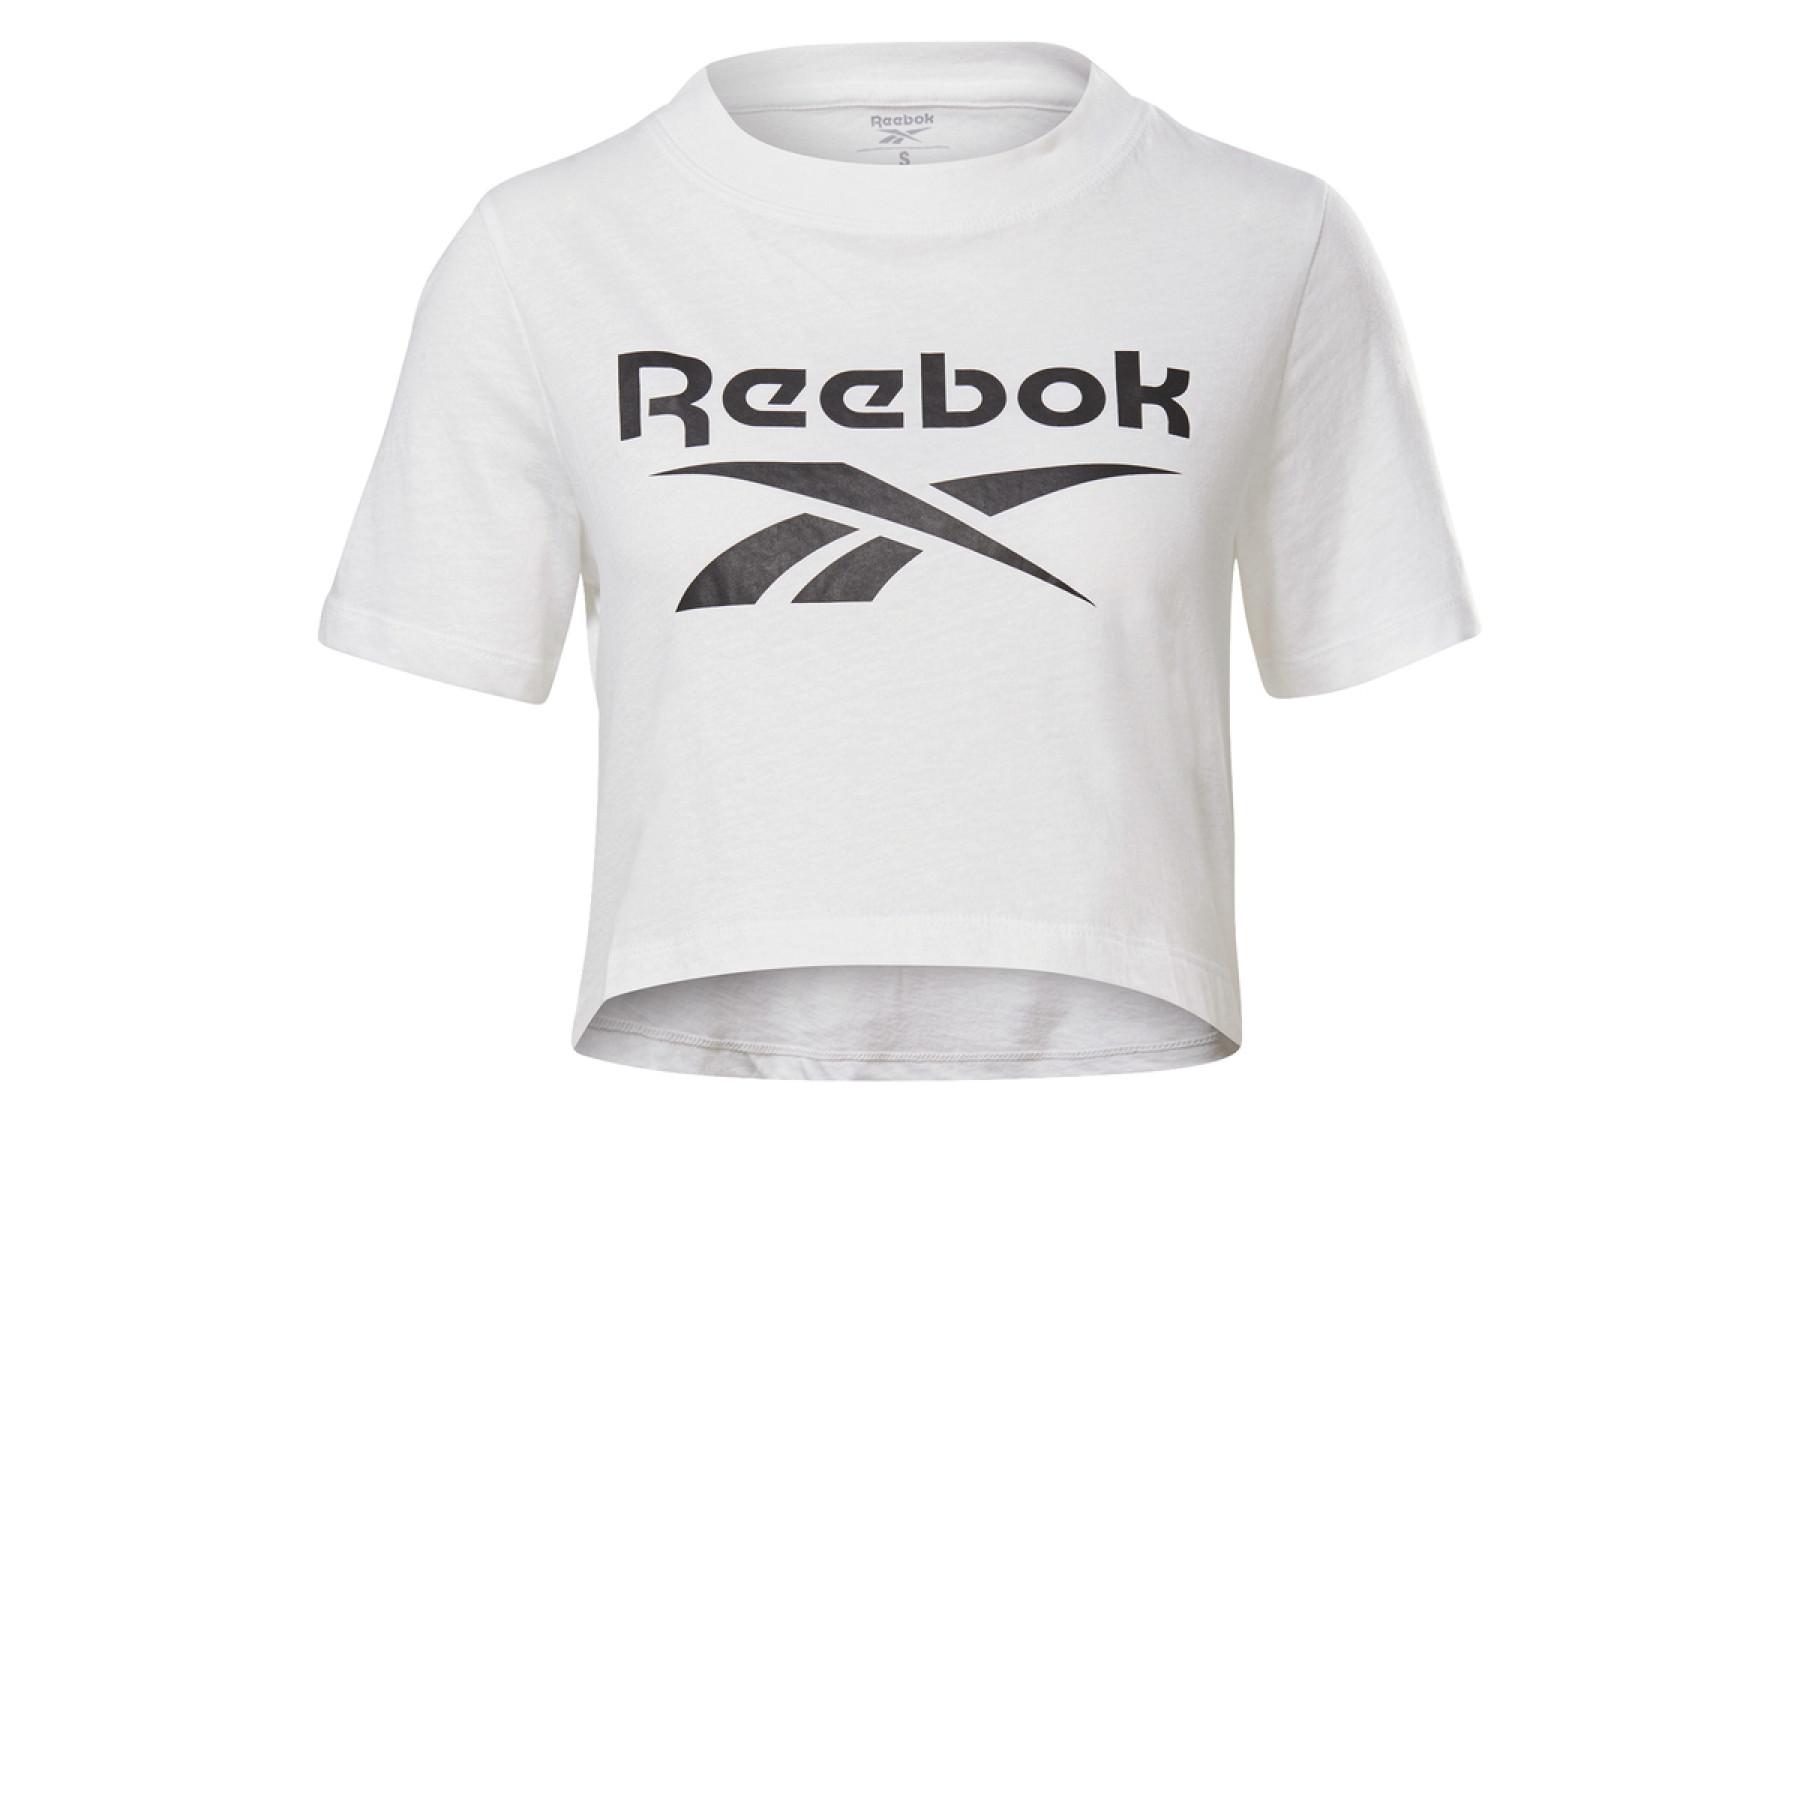 Women's T-shirt Reebok Identity Cropped